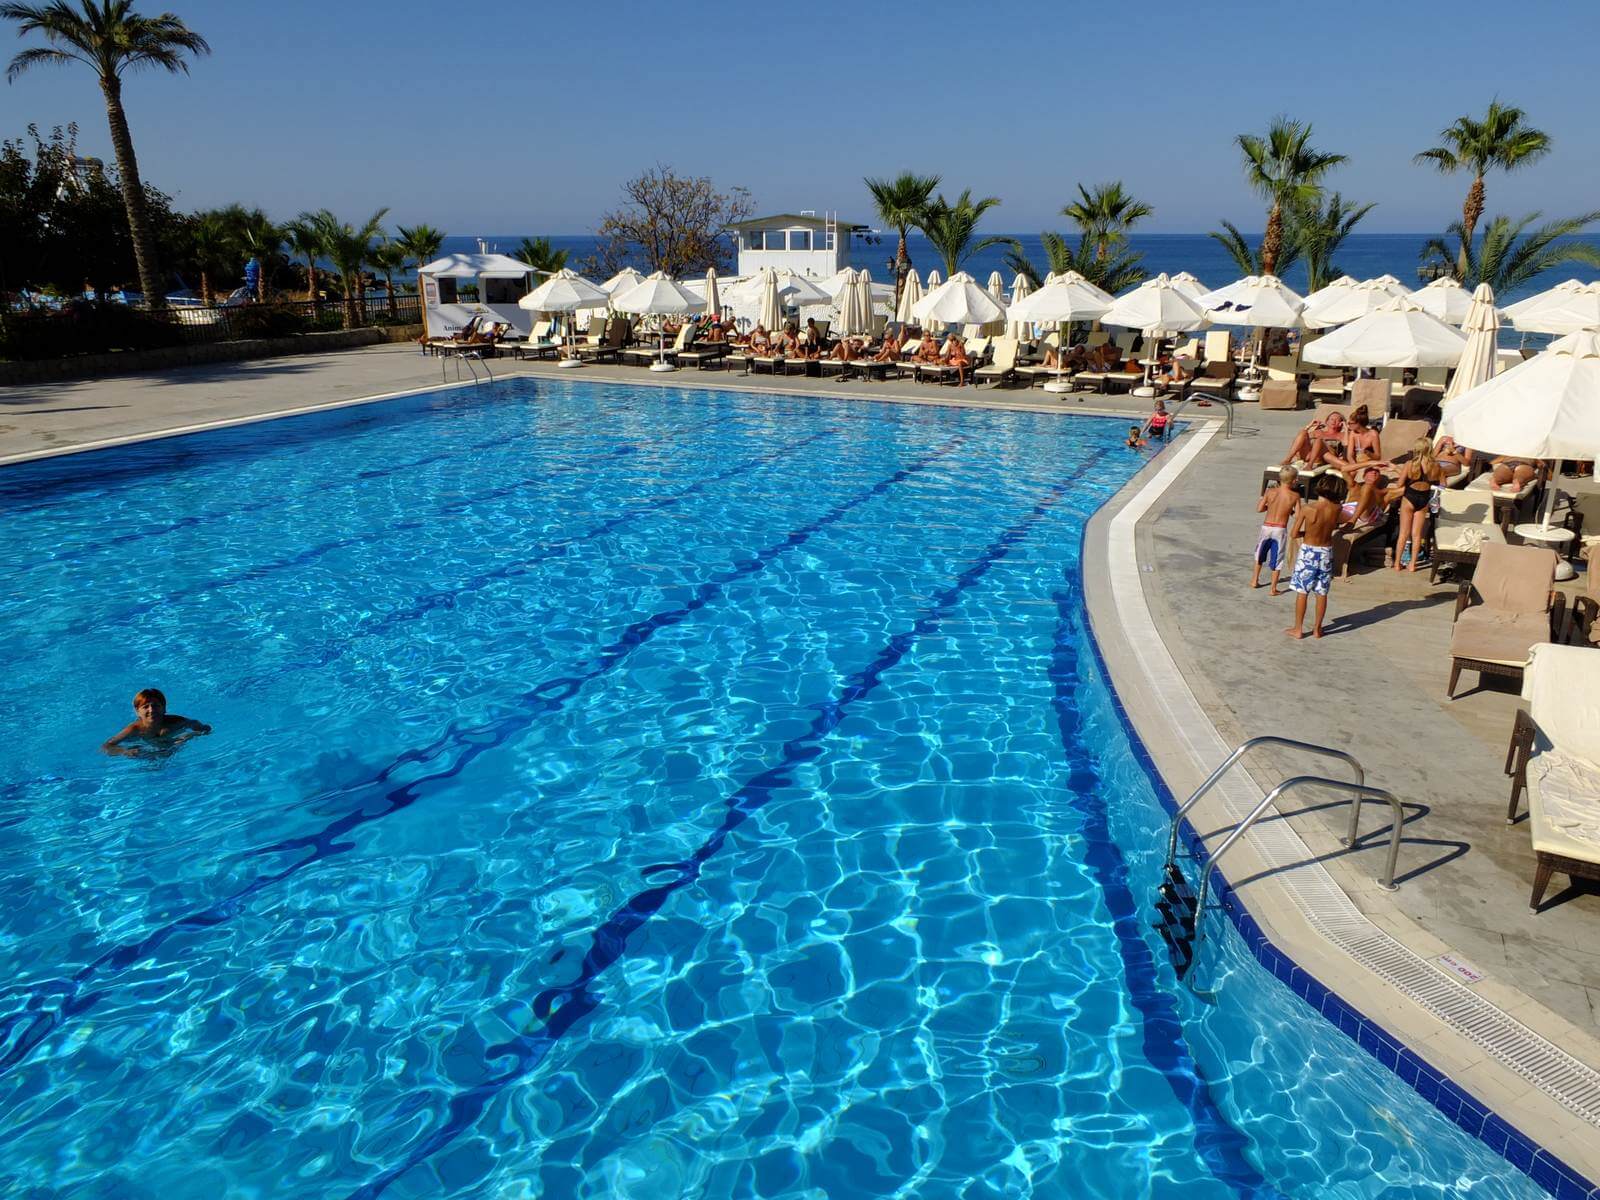 Foto: Hotel Acapulco groer Pool zur Strandseite - Lupe Reisen